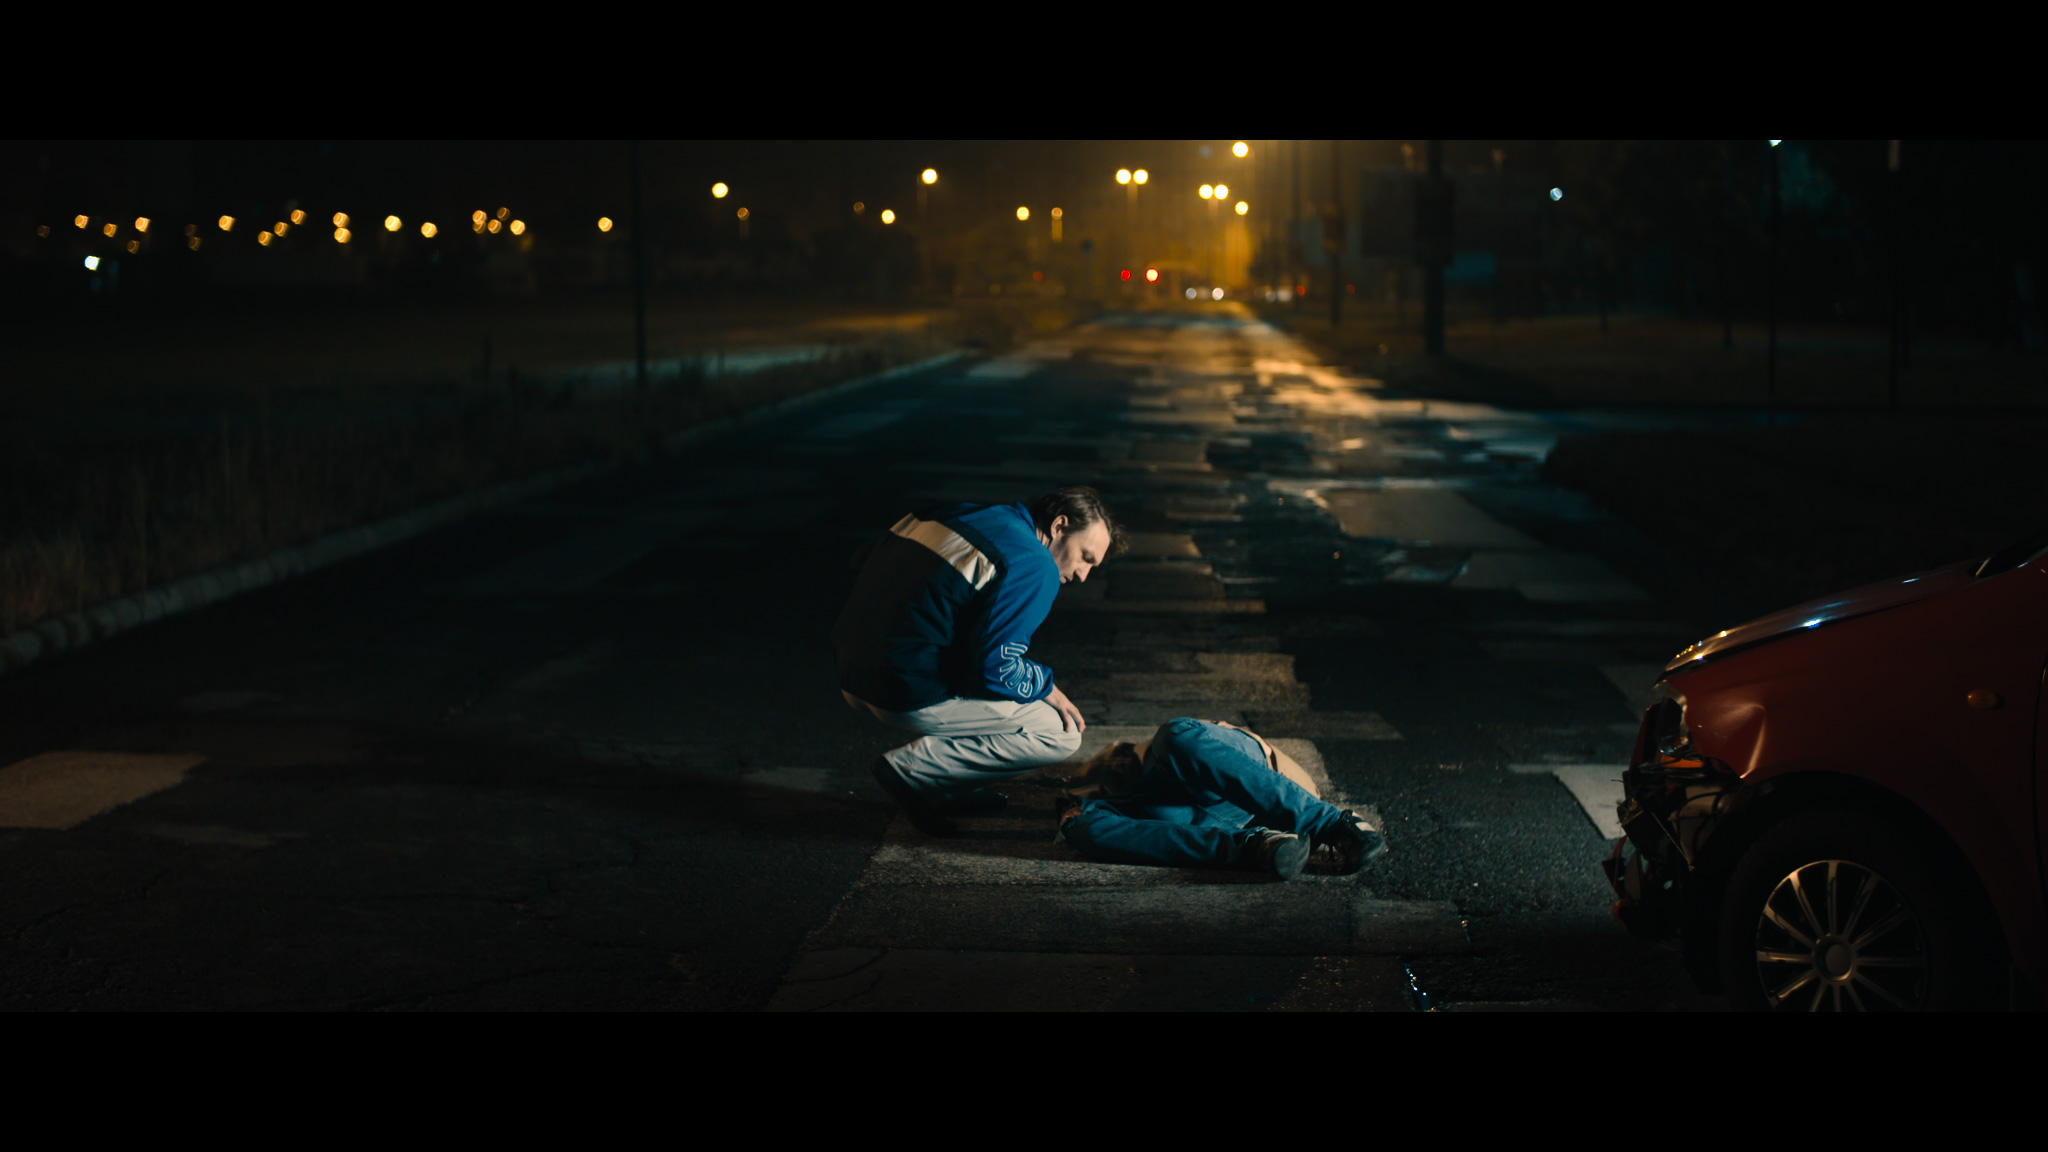 eszter galambos, Still from the movie Accident. Director: Bohdan Herkaliuk, DOP, operatőr: Eszter Galambos, cast: Orbán Levente, colorist: Anna Stalter